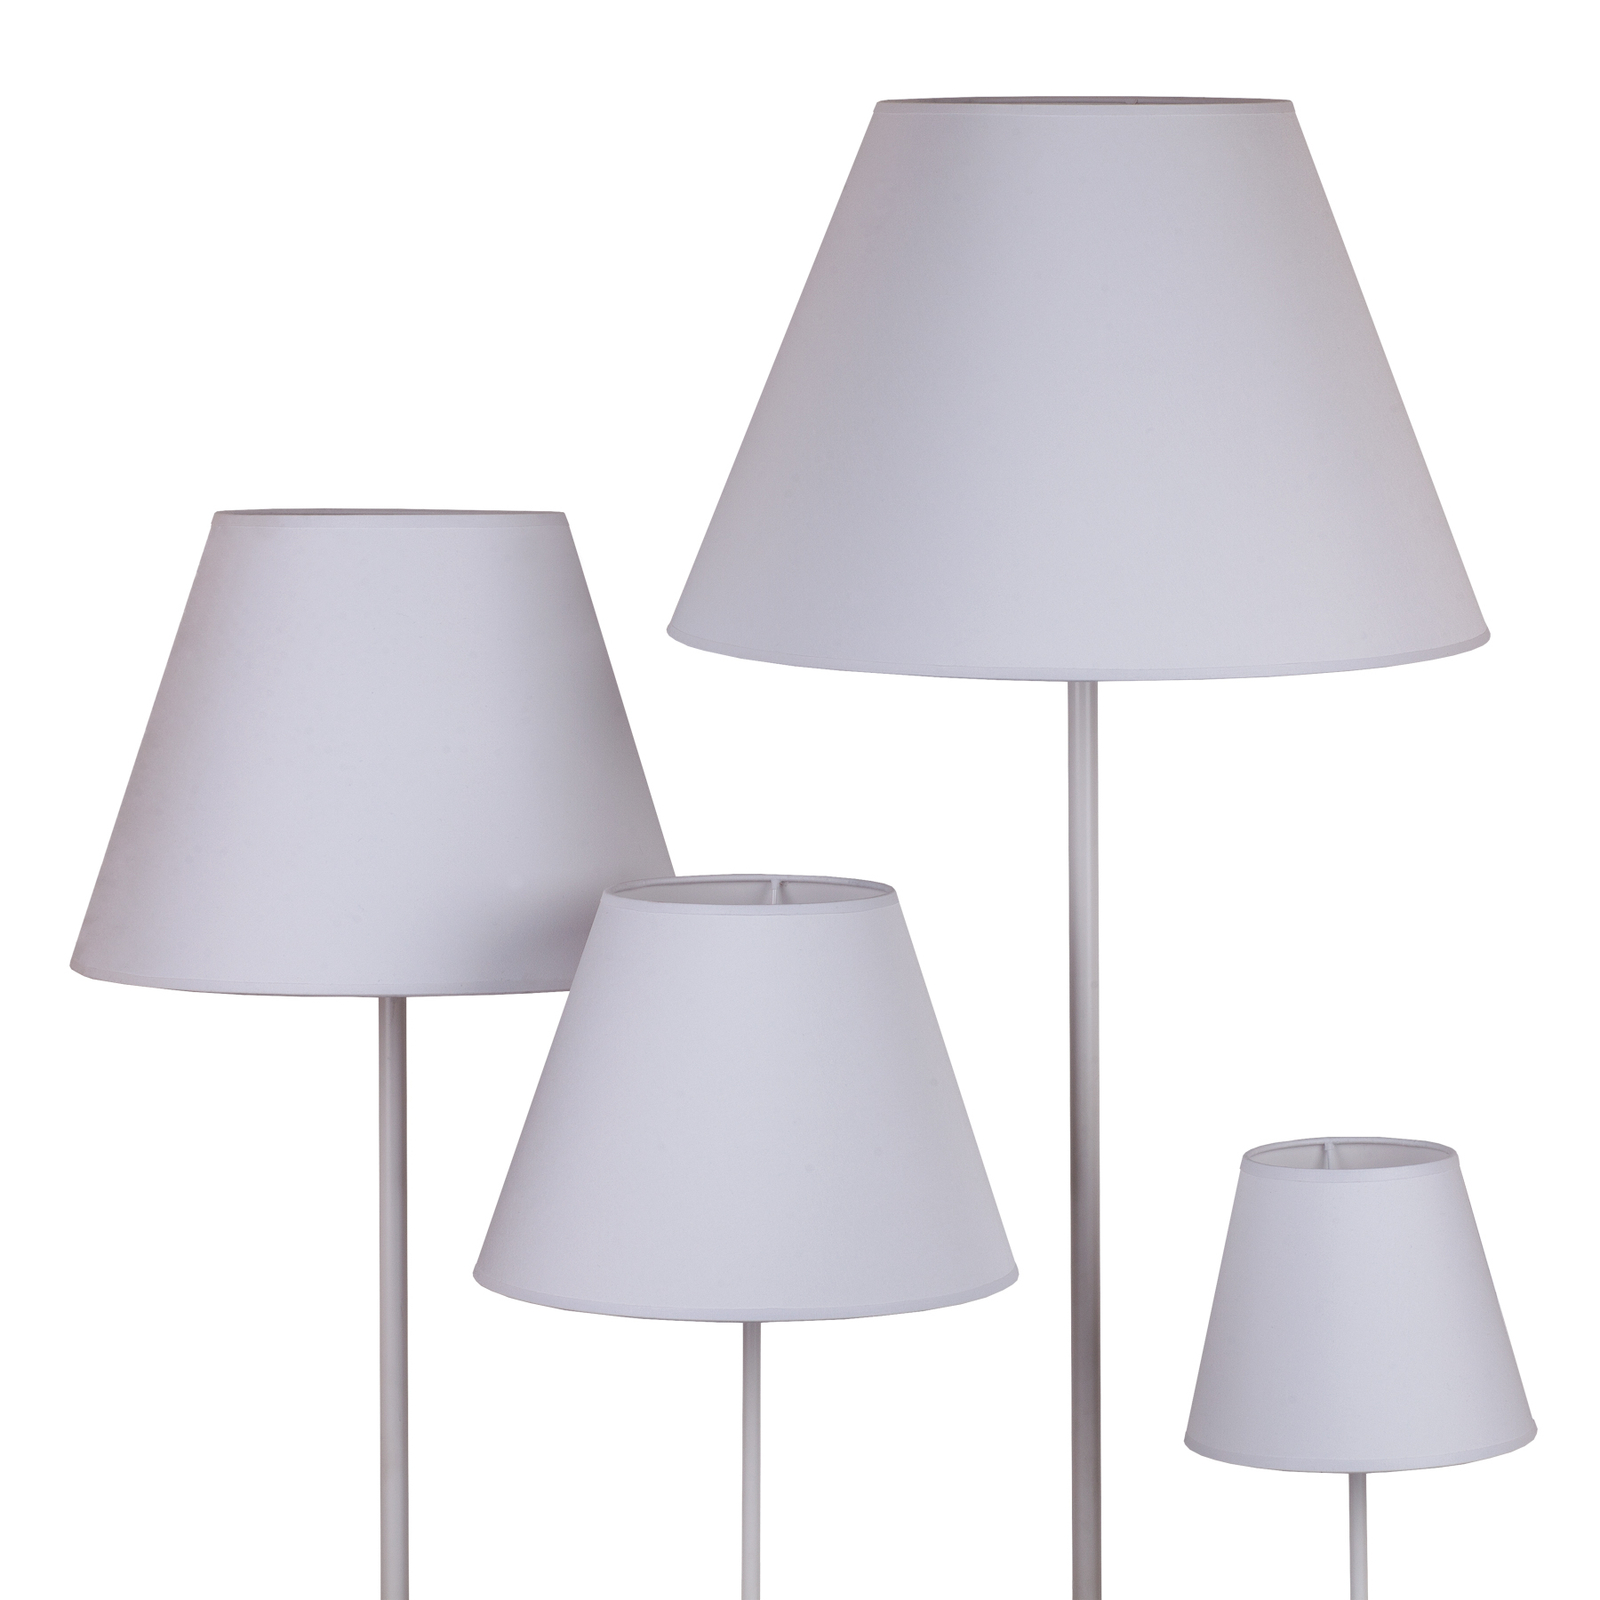 Sofia lampshade height 26 cm, white